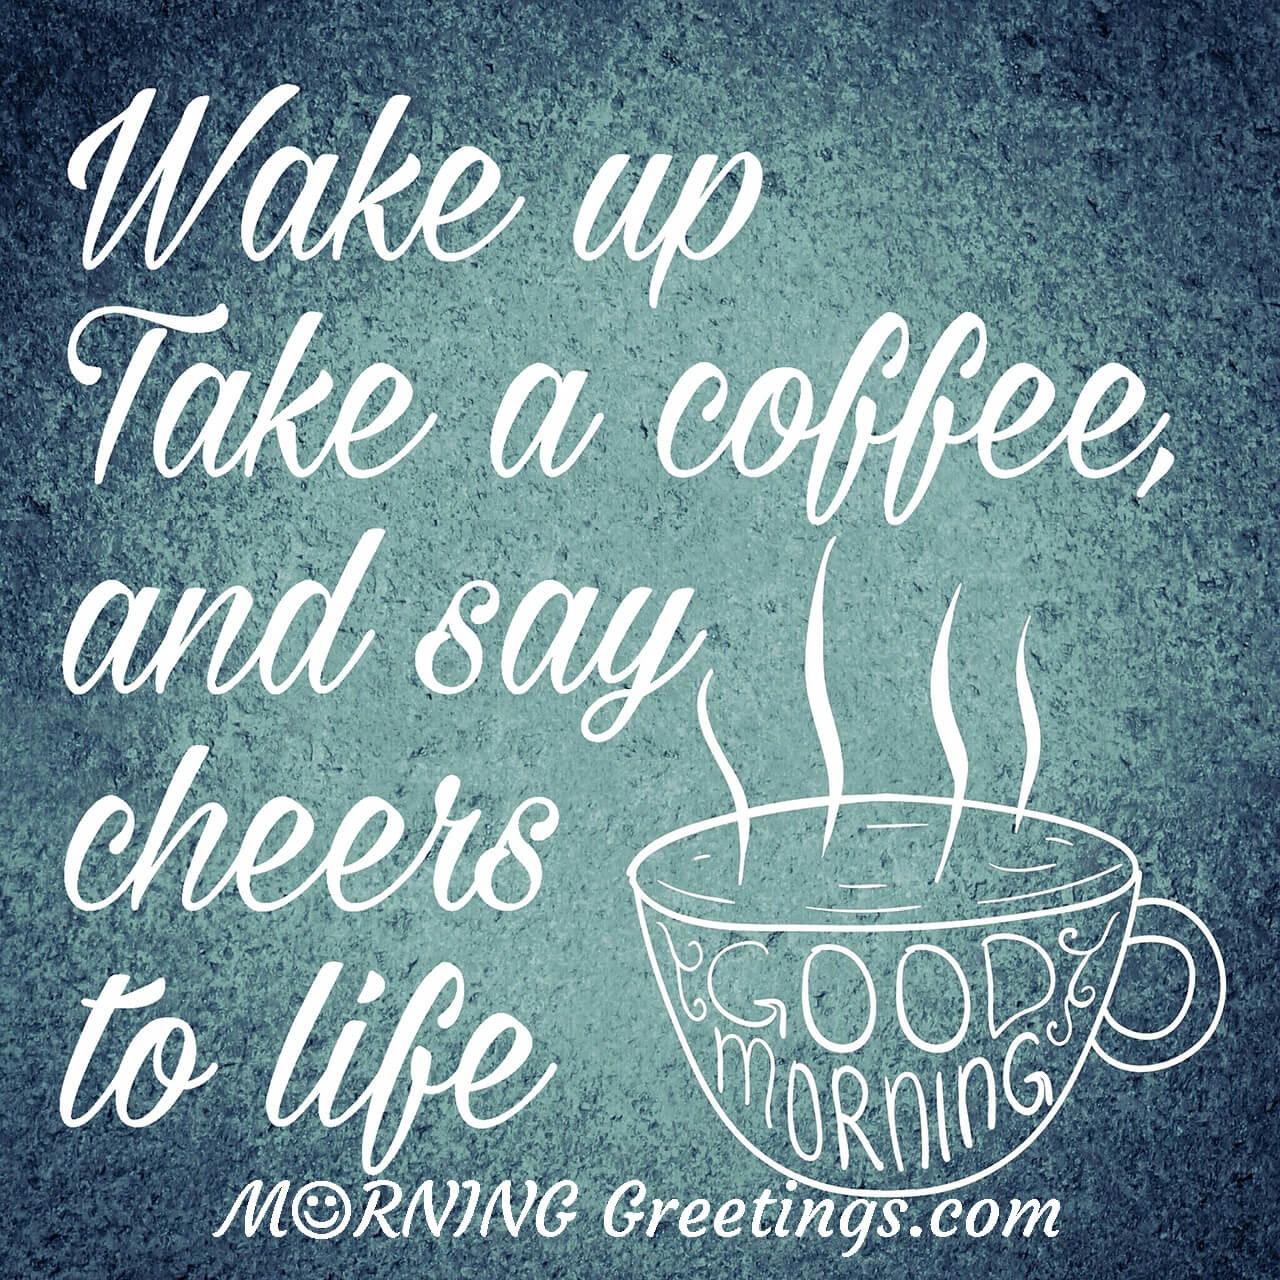 My coffee day. Цитаты про кофе на английском. Good Day Coffee. Bad Day Coffee good Day Coffee. Morning Coffee quotes.